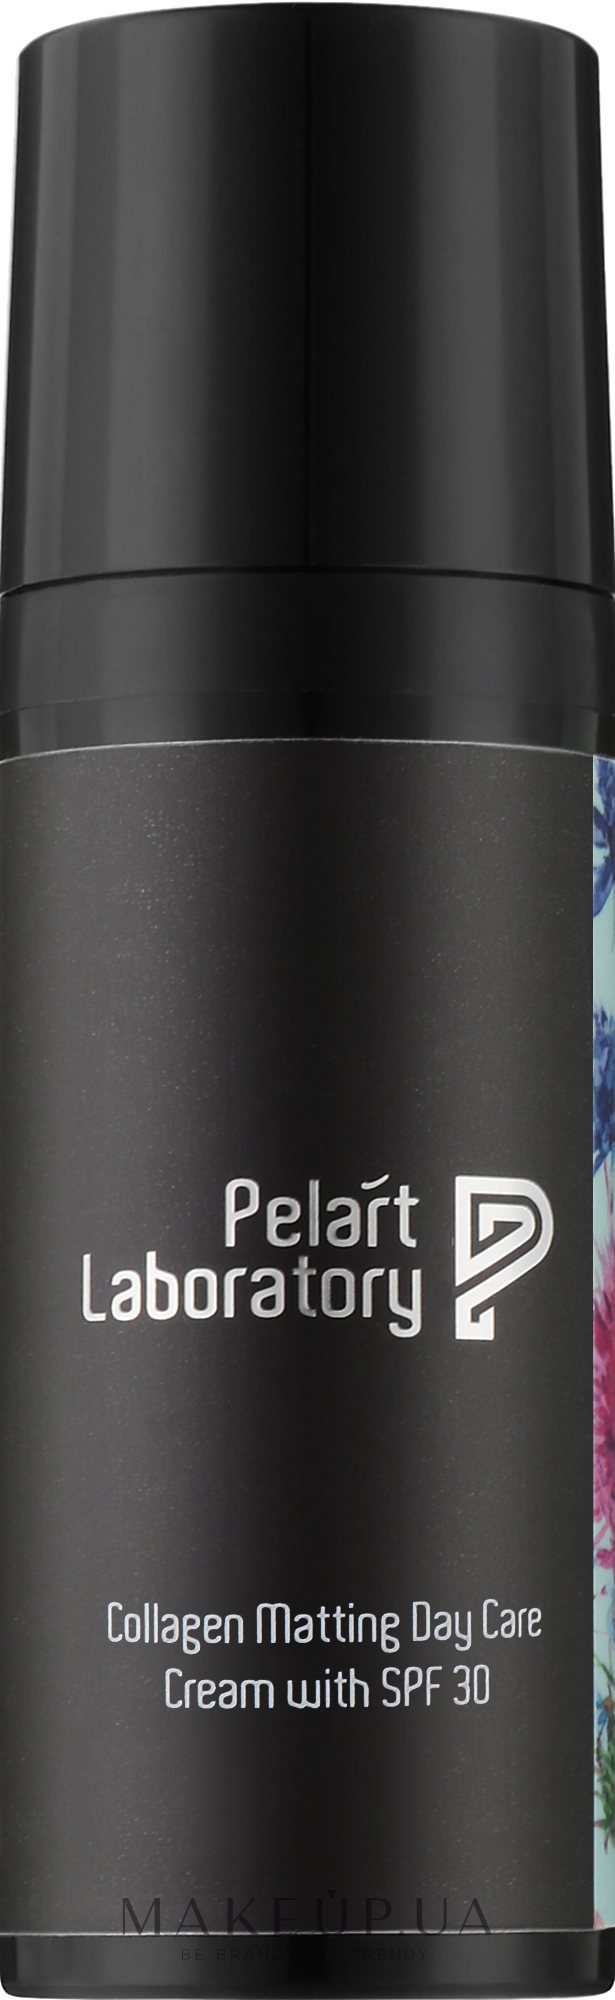 Денний матувальний крем з колагеном SPF 30 для обличчя - Pelart Laboratory Collagen Matting Day Care Cream With SPF 30 — фото 50ml